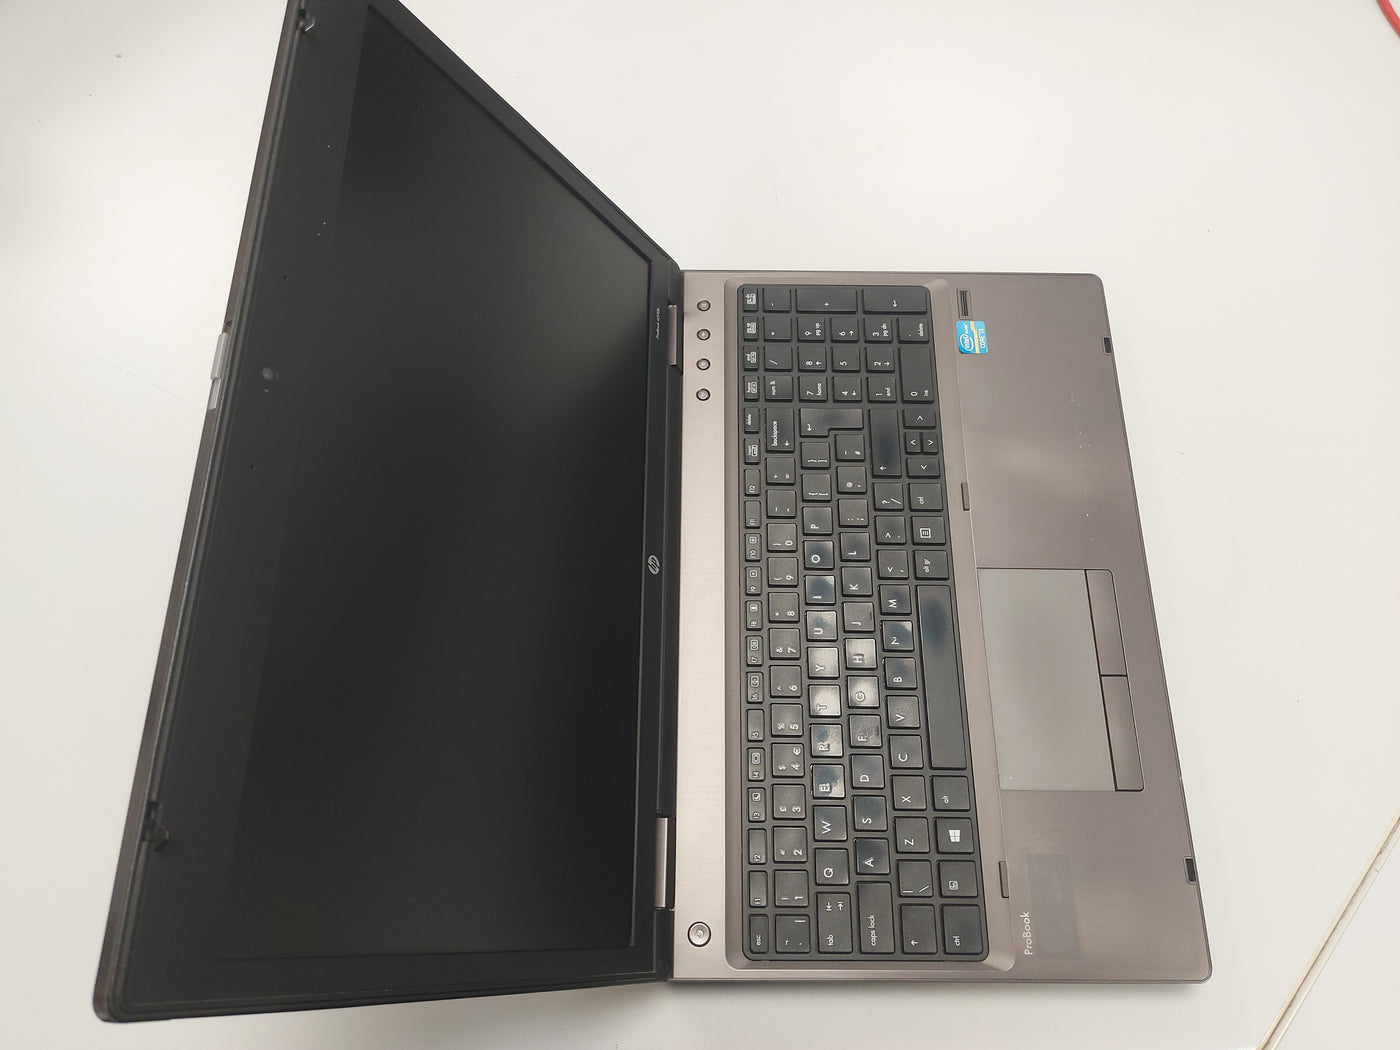 HP ProBook 6570b 250GB HDD Core i3-3110M 2400MHz 4GB RAM 15.6" Laptop ( 6570b ) USED